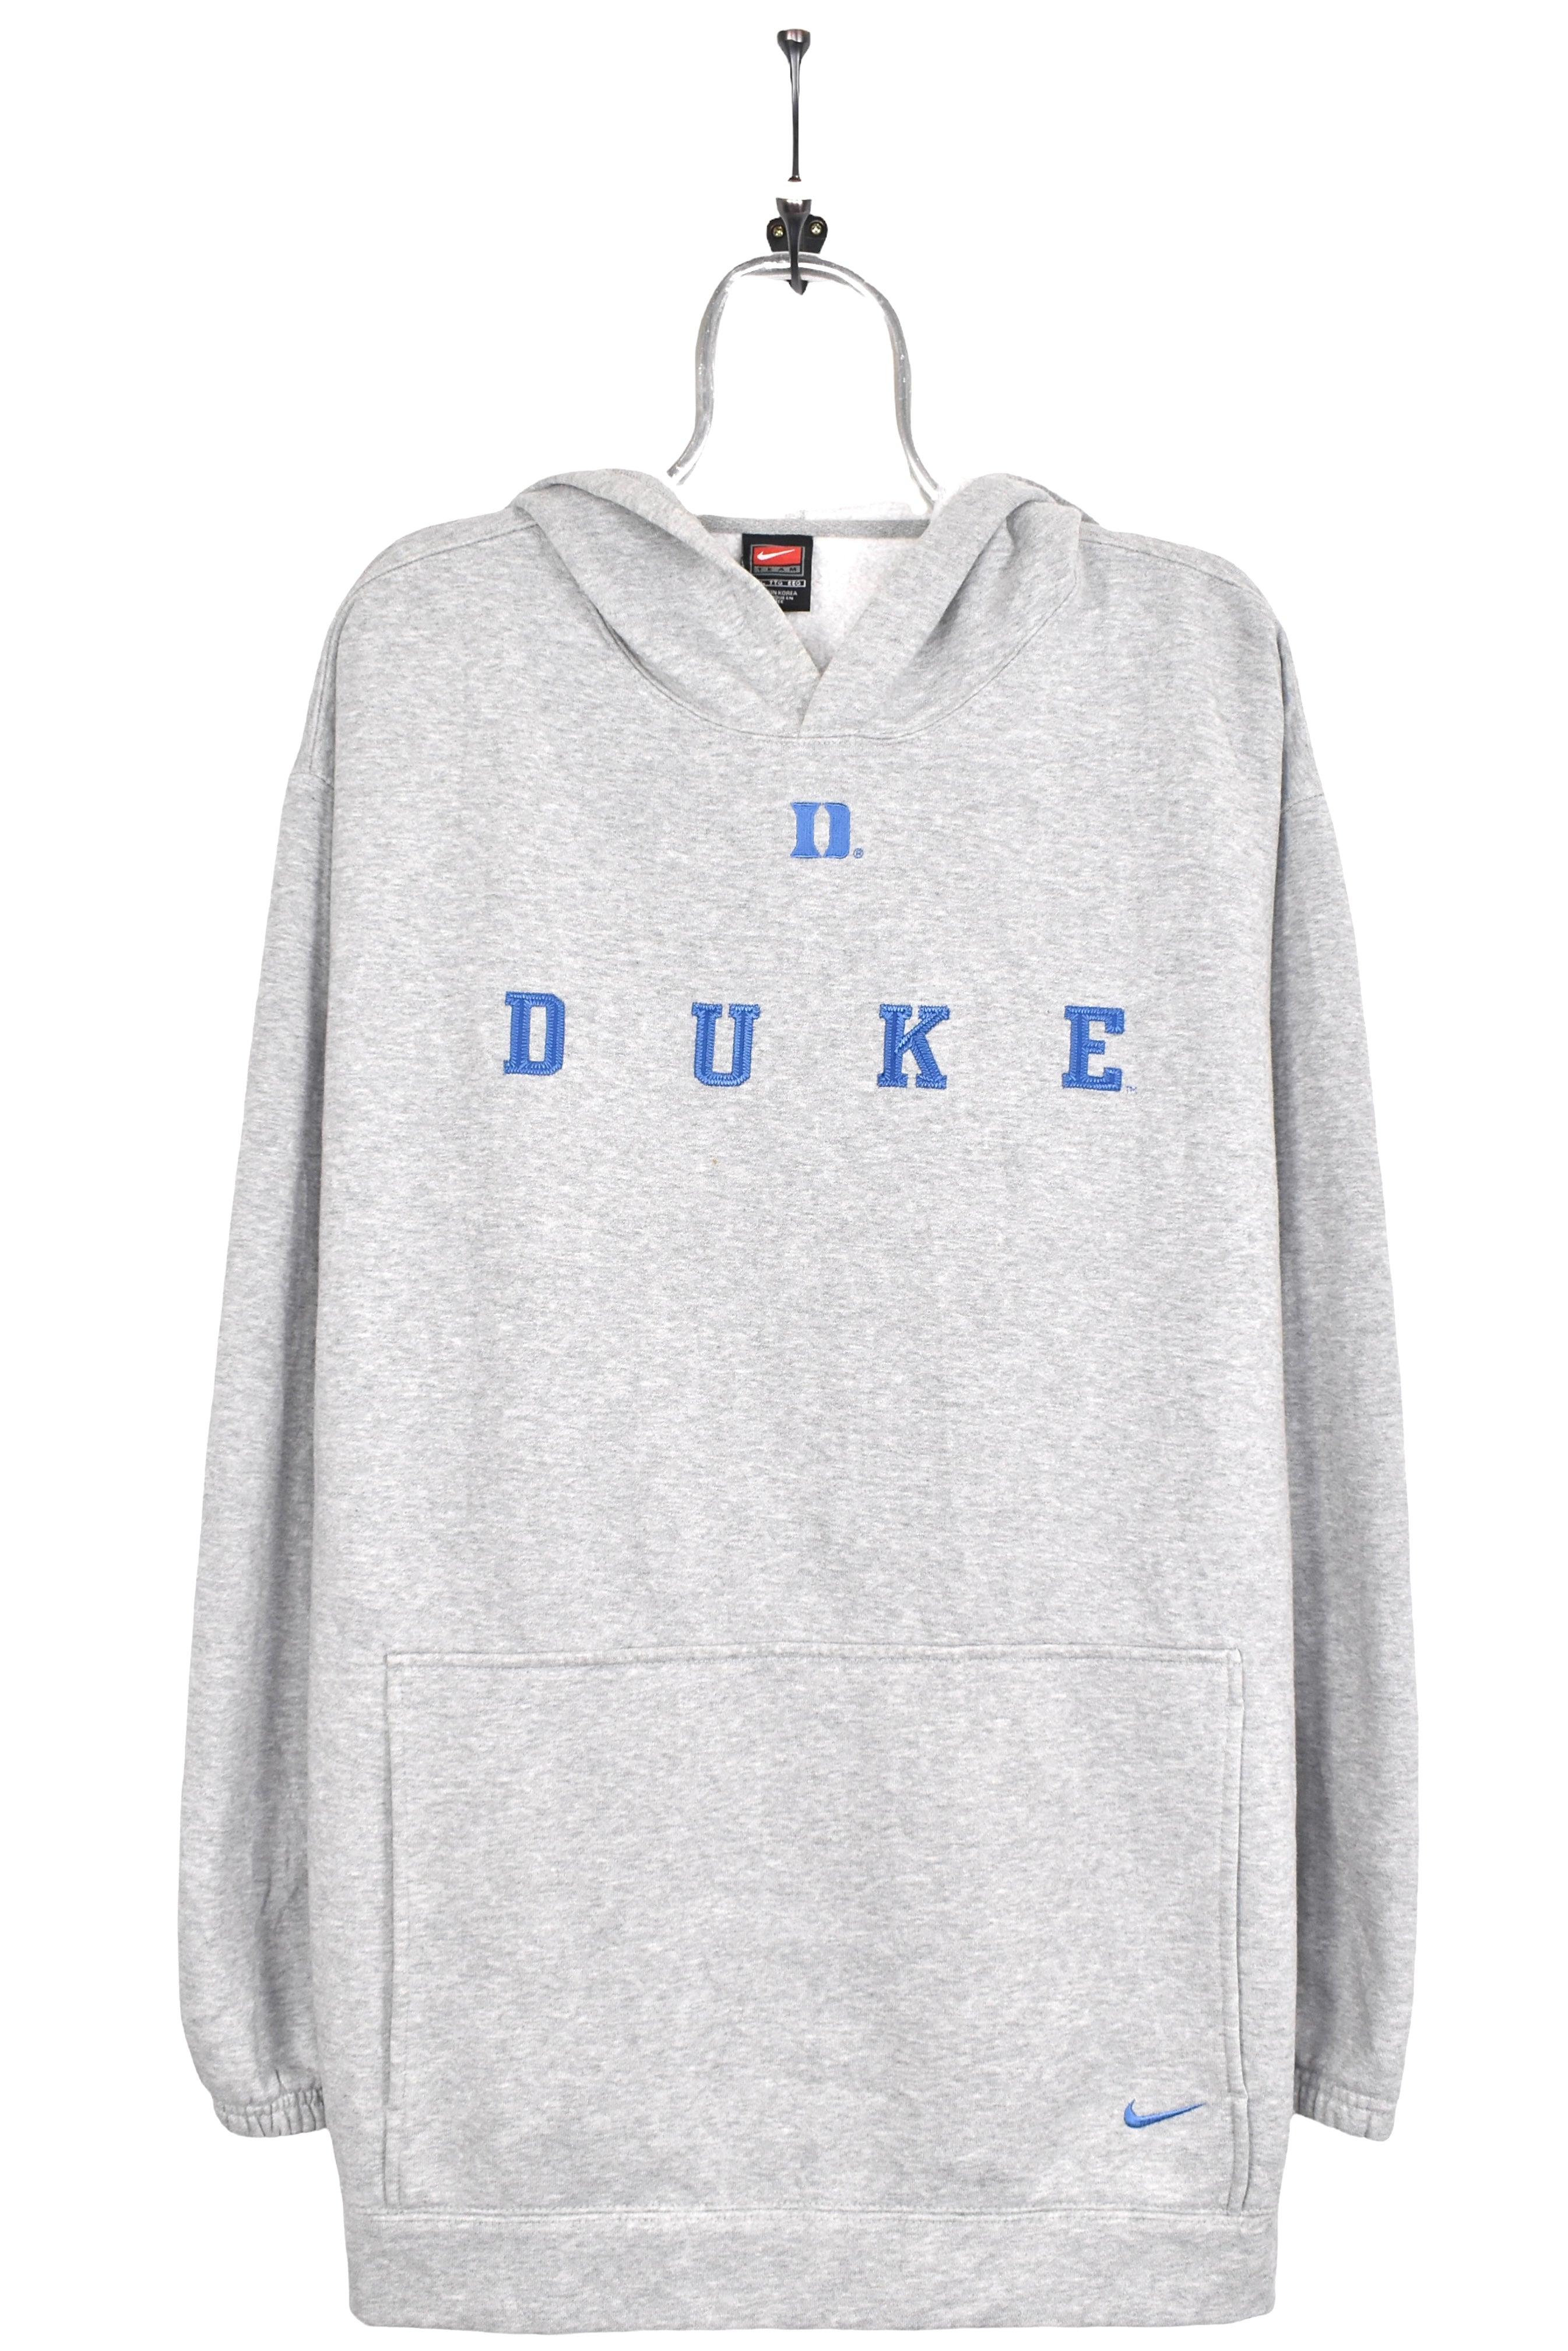 Vintage Duke University hoodie, grey embroidered sweatshirt - AU XXL COLLEGE